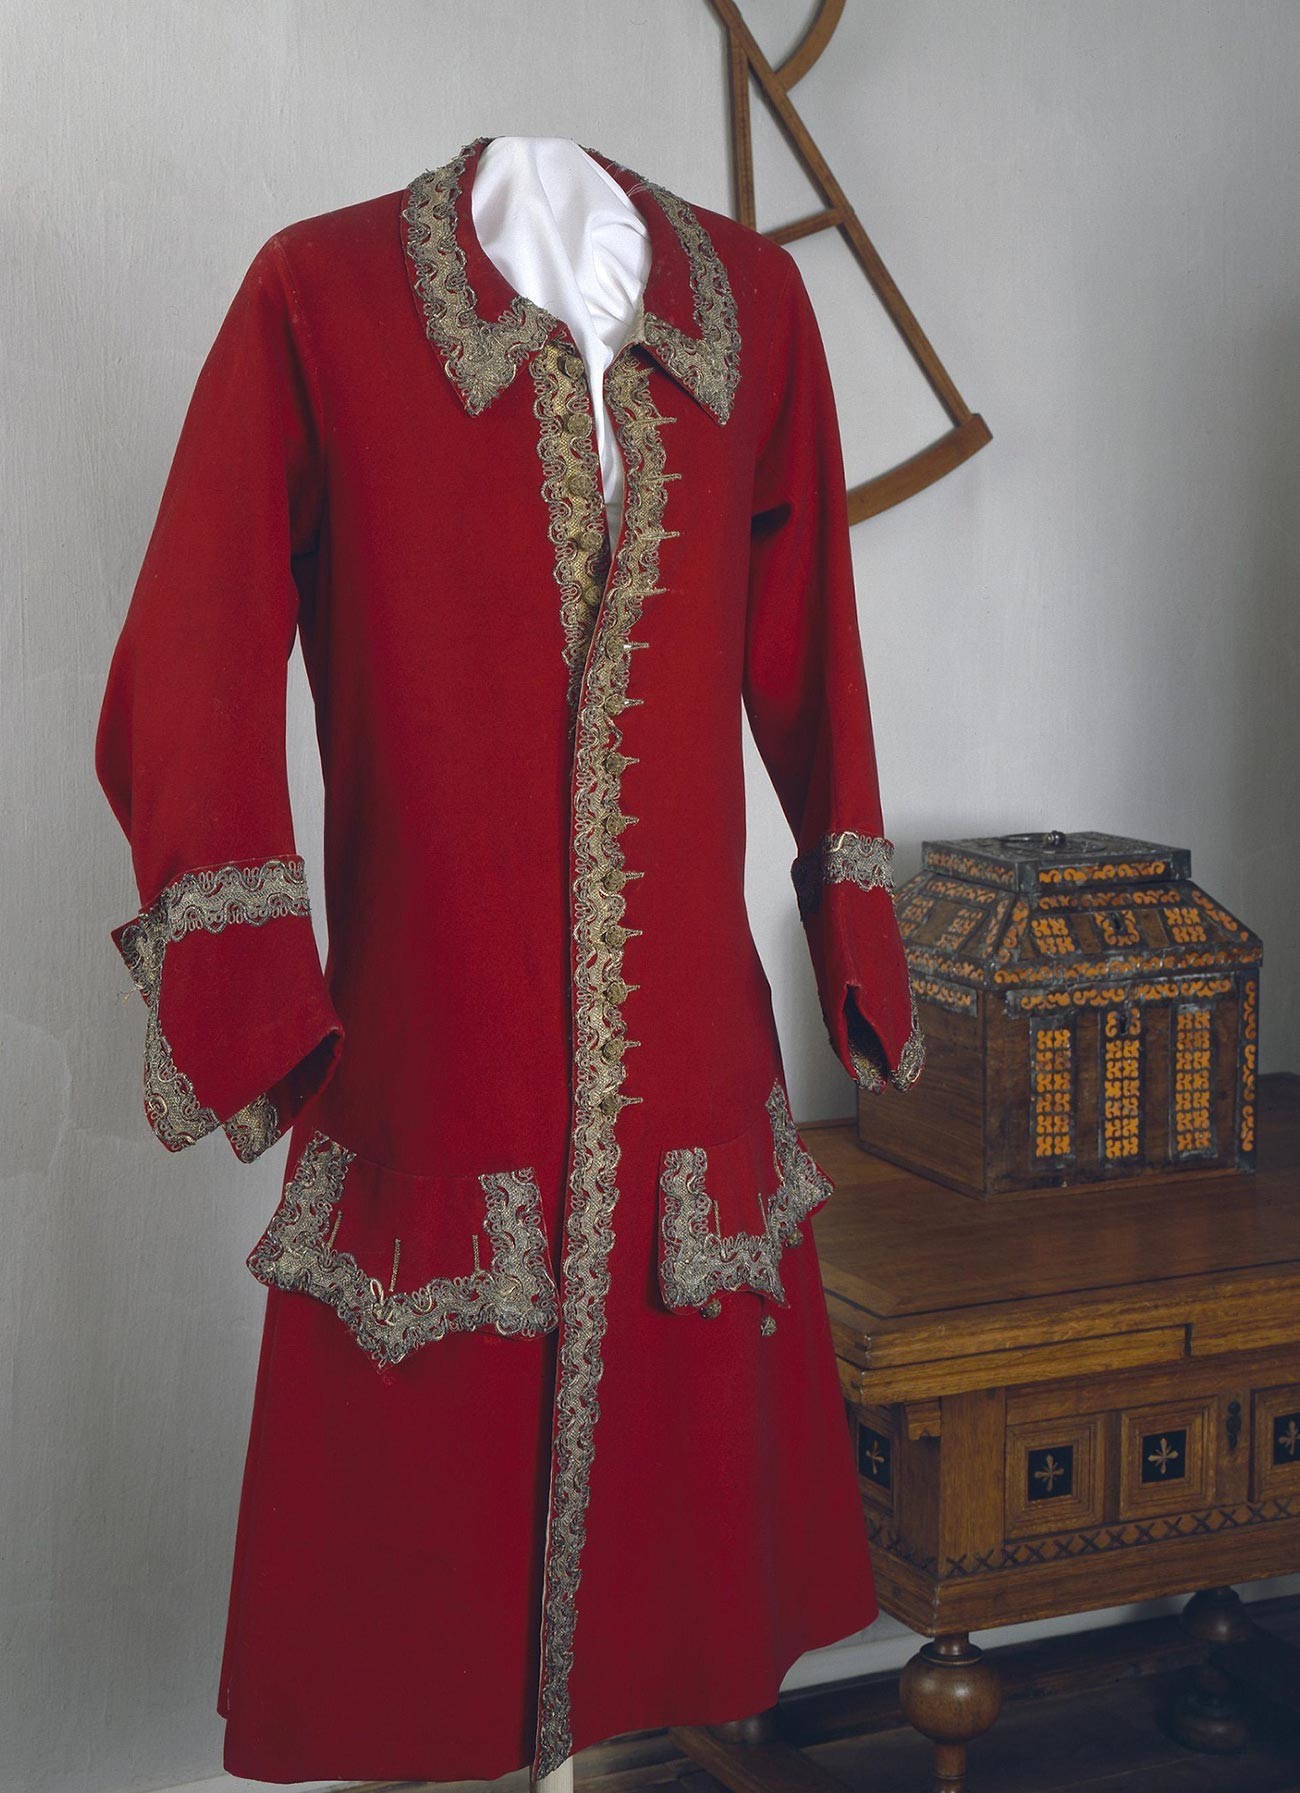 Kaftan (semacam jaket) seremonial Pyotr yang Agung.